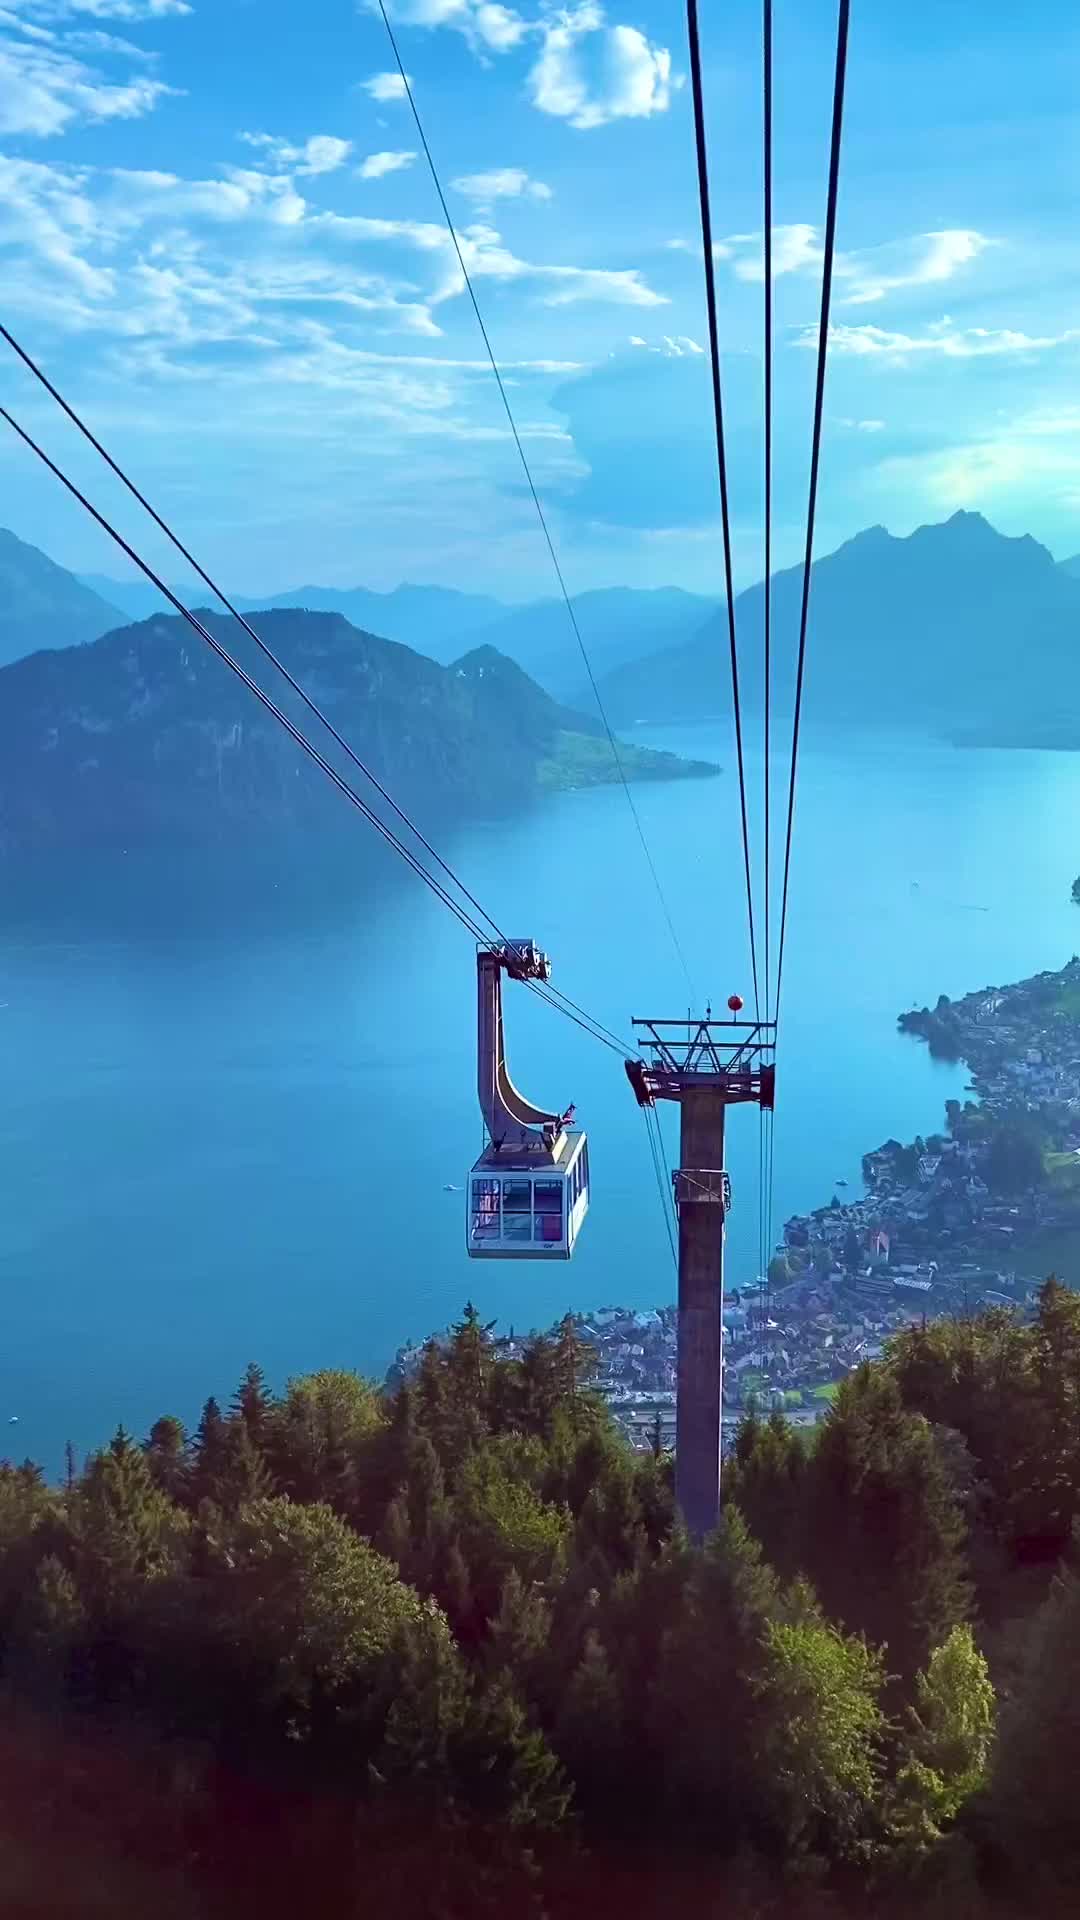 Stunning Rigi Kaltbad Views & Cable Car Near Zurich